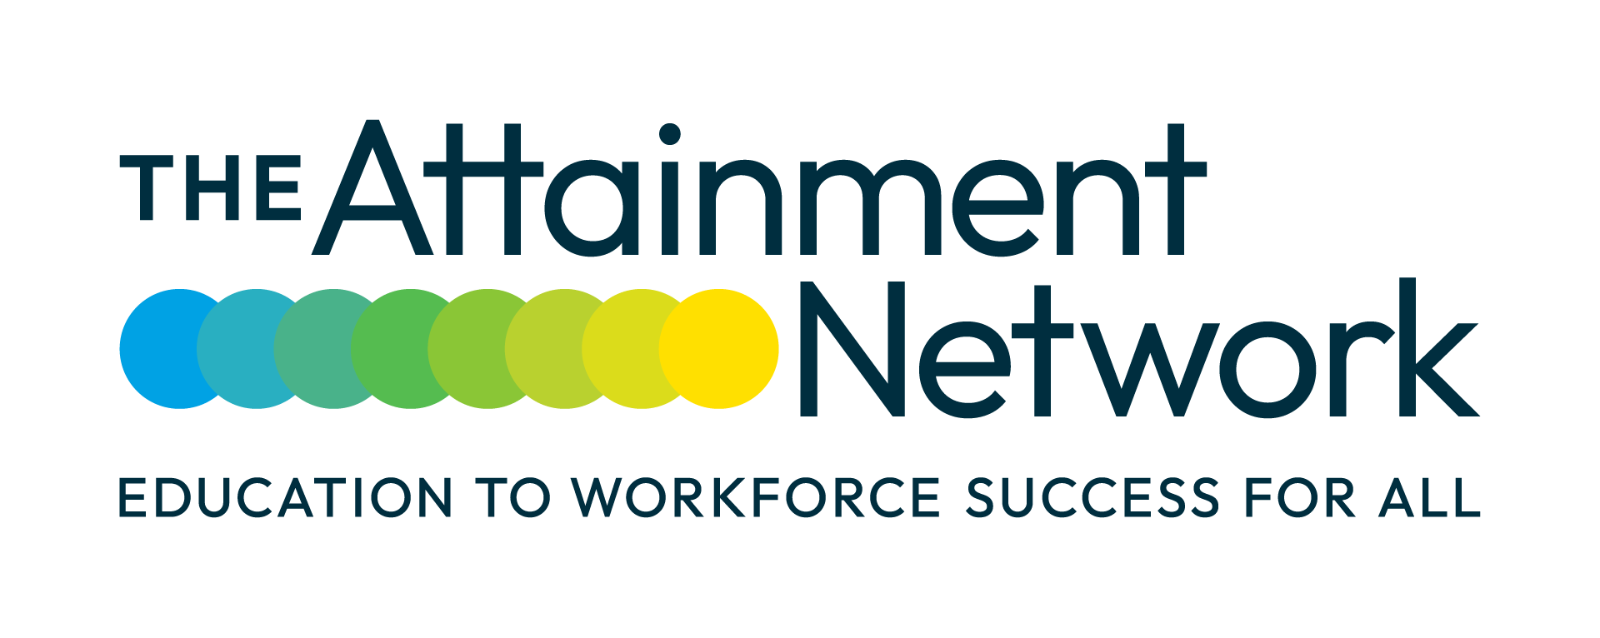 The Attainment Network Logo